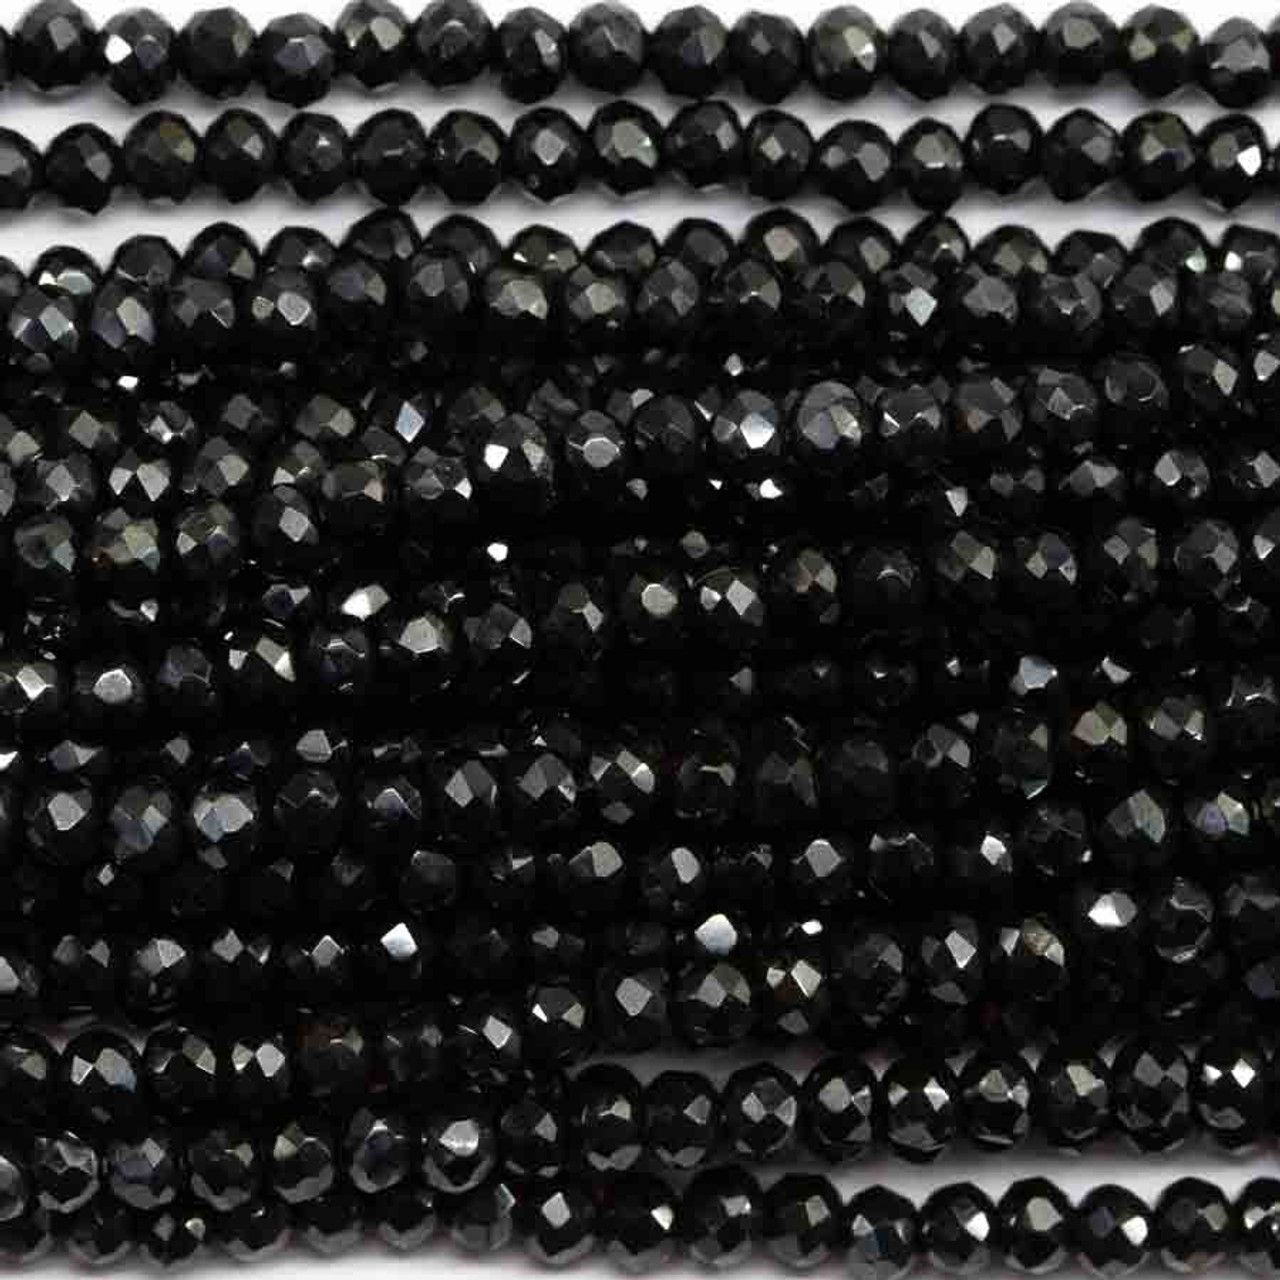 BLACK SPINEL 3mm High Grade Faceted Gemstone Beads Strand